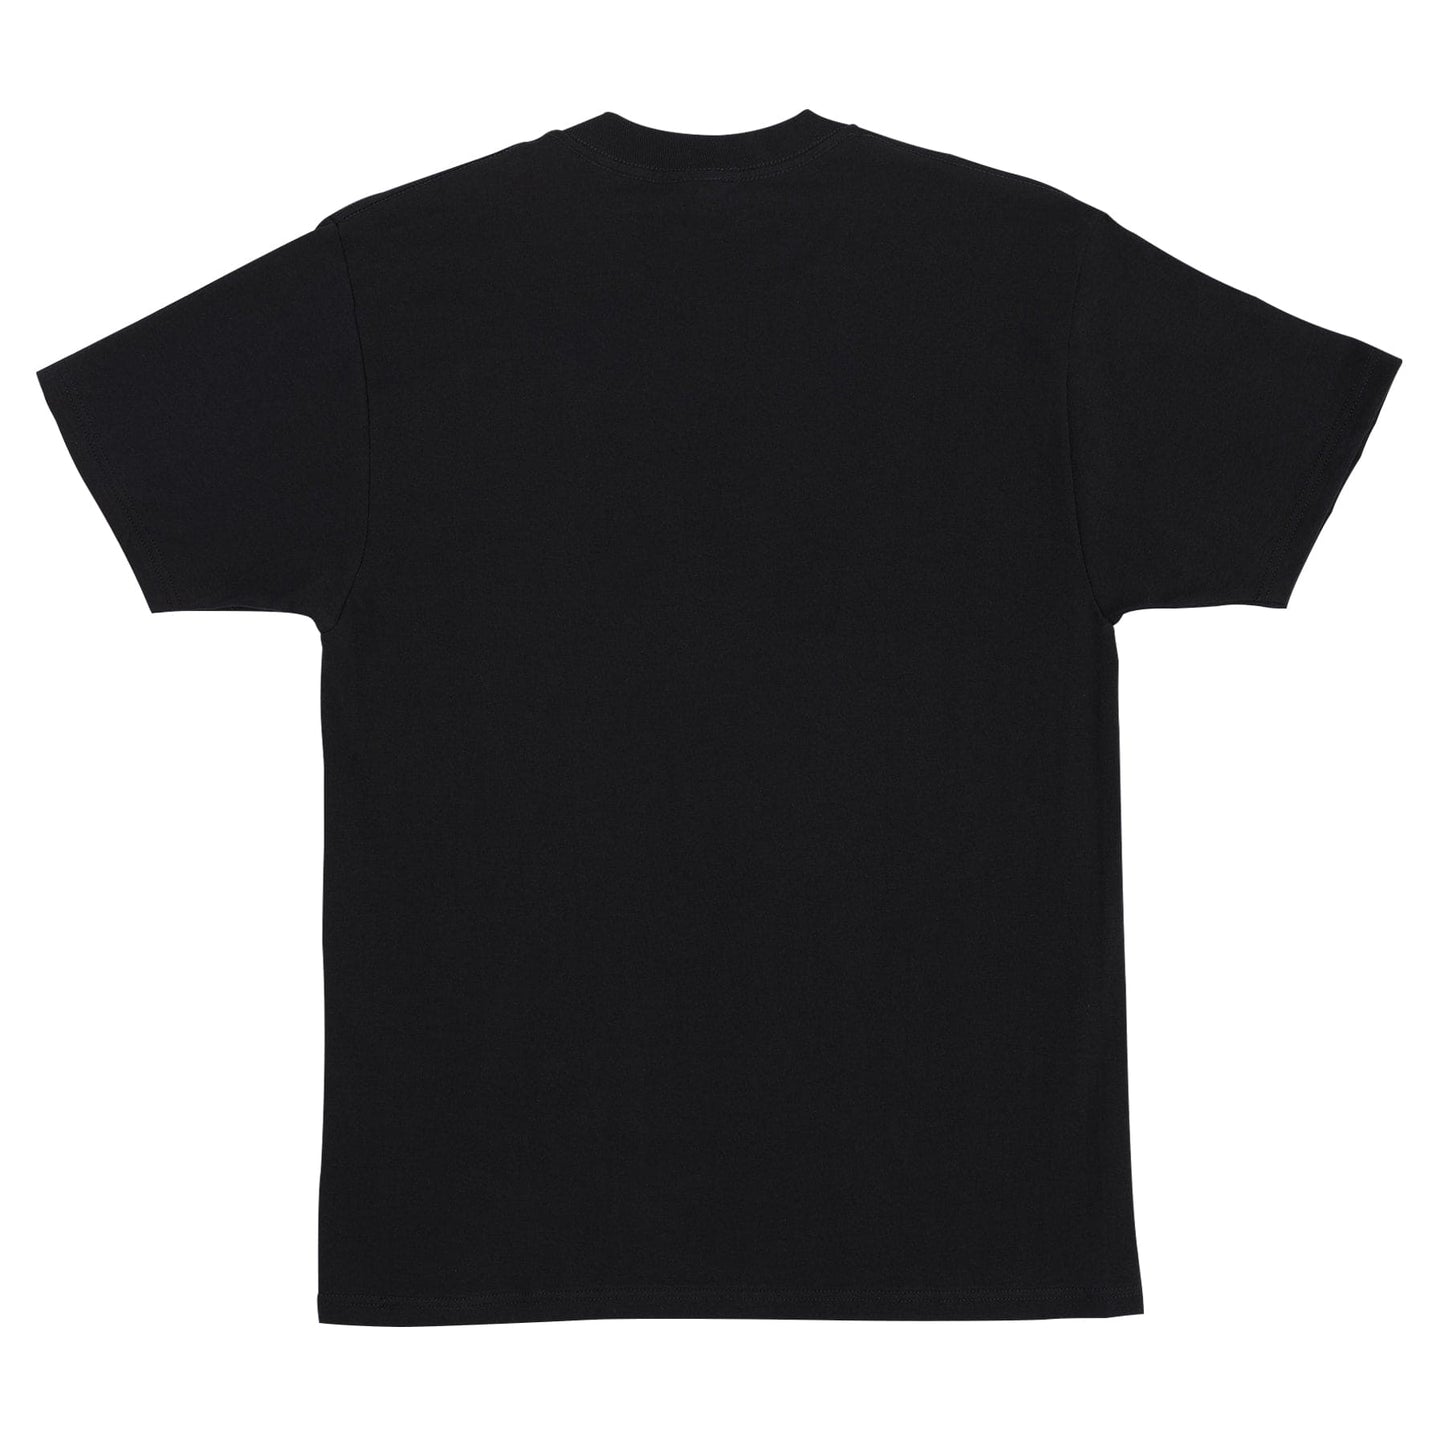 Santa Cruz | Pokemon Ghost Type 3 Shirt - Black